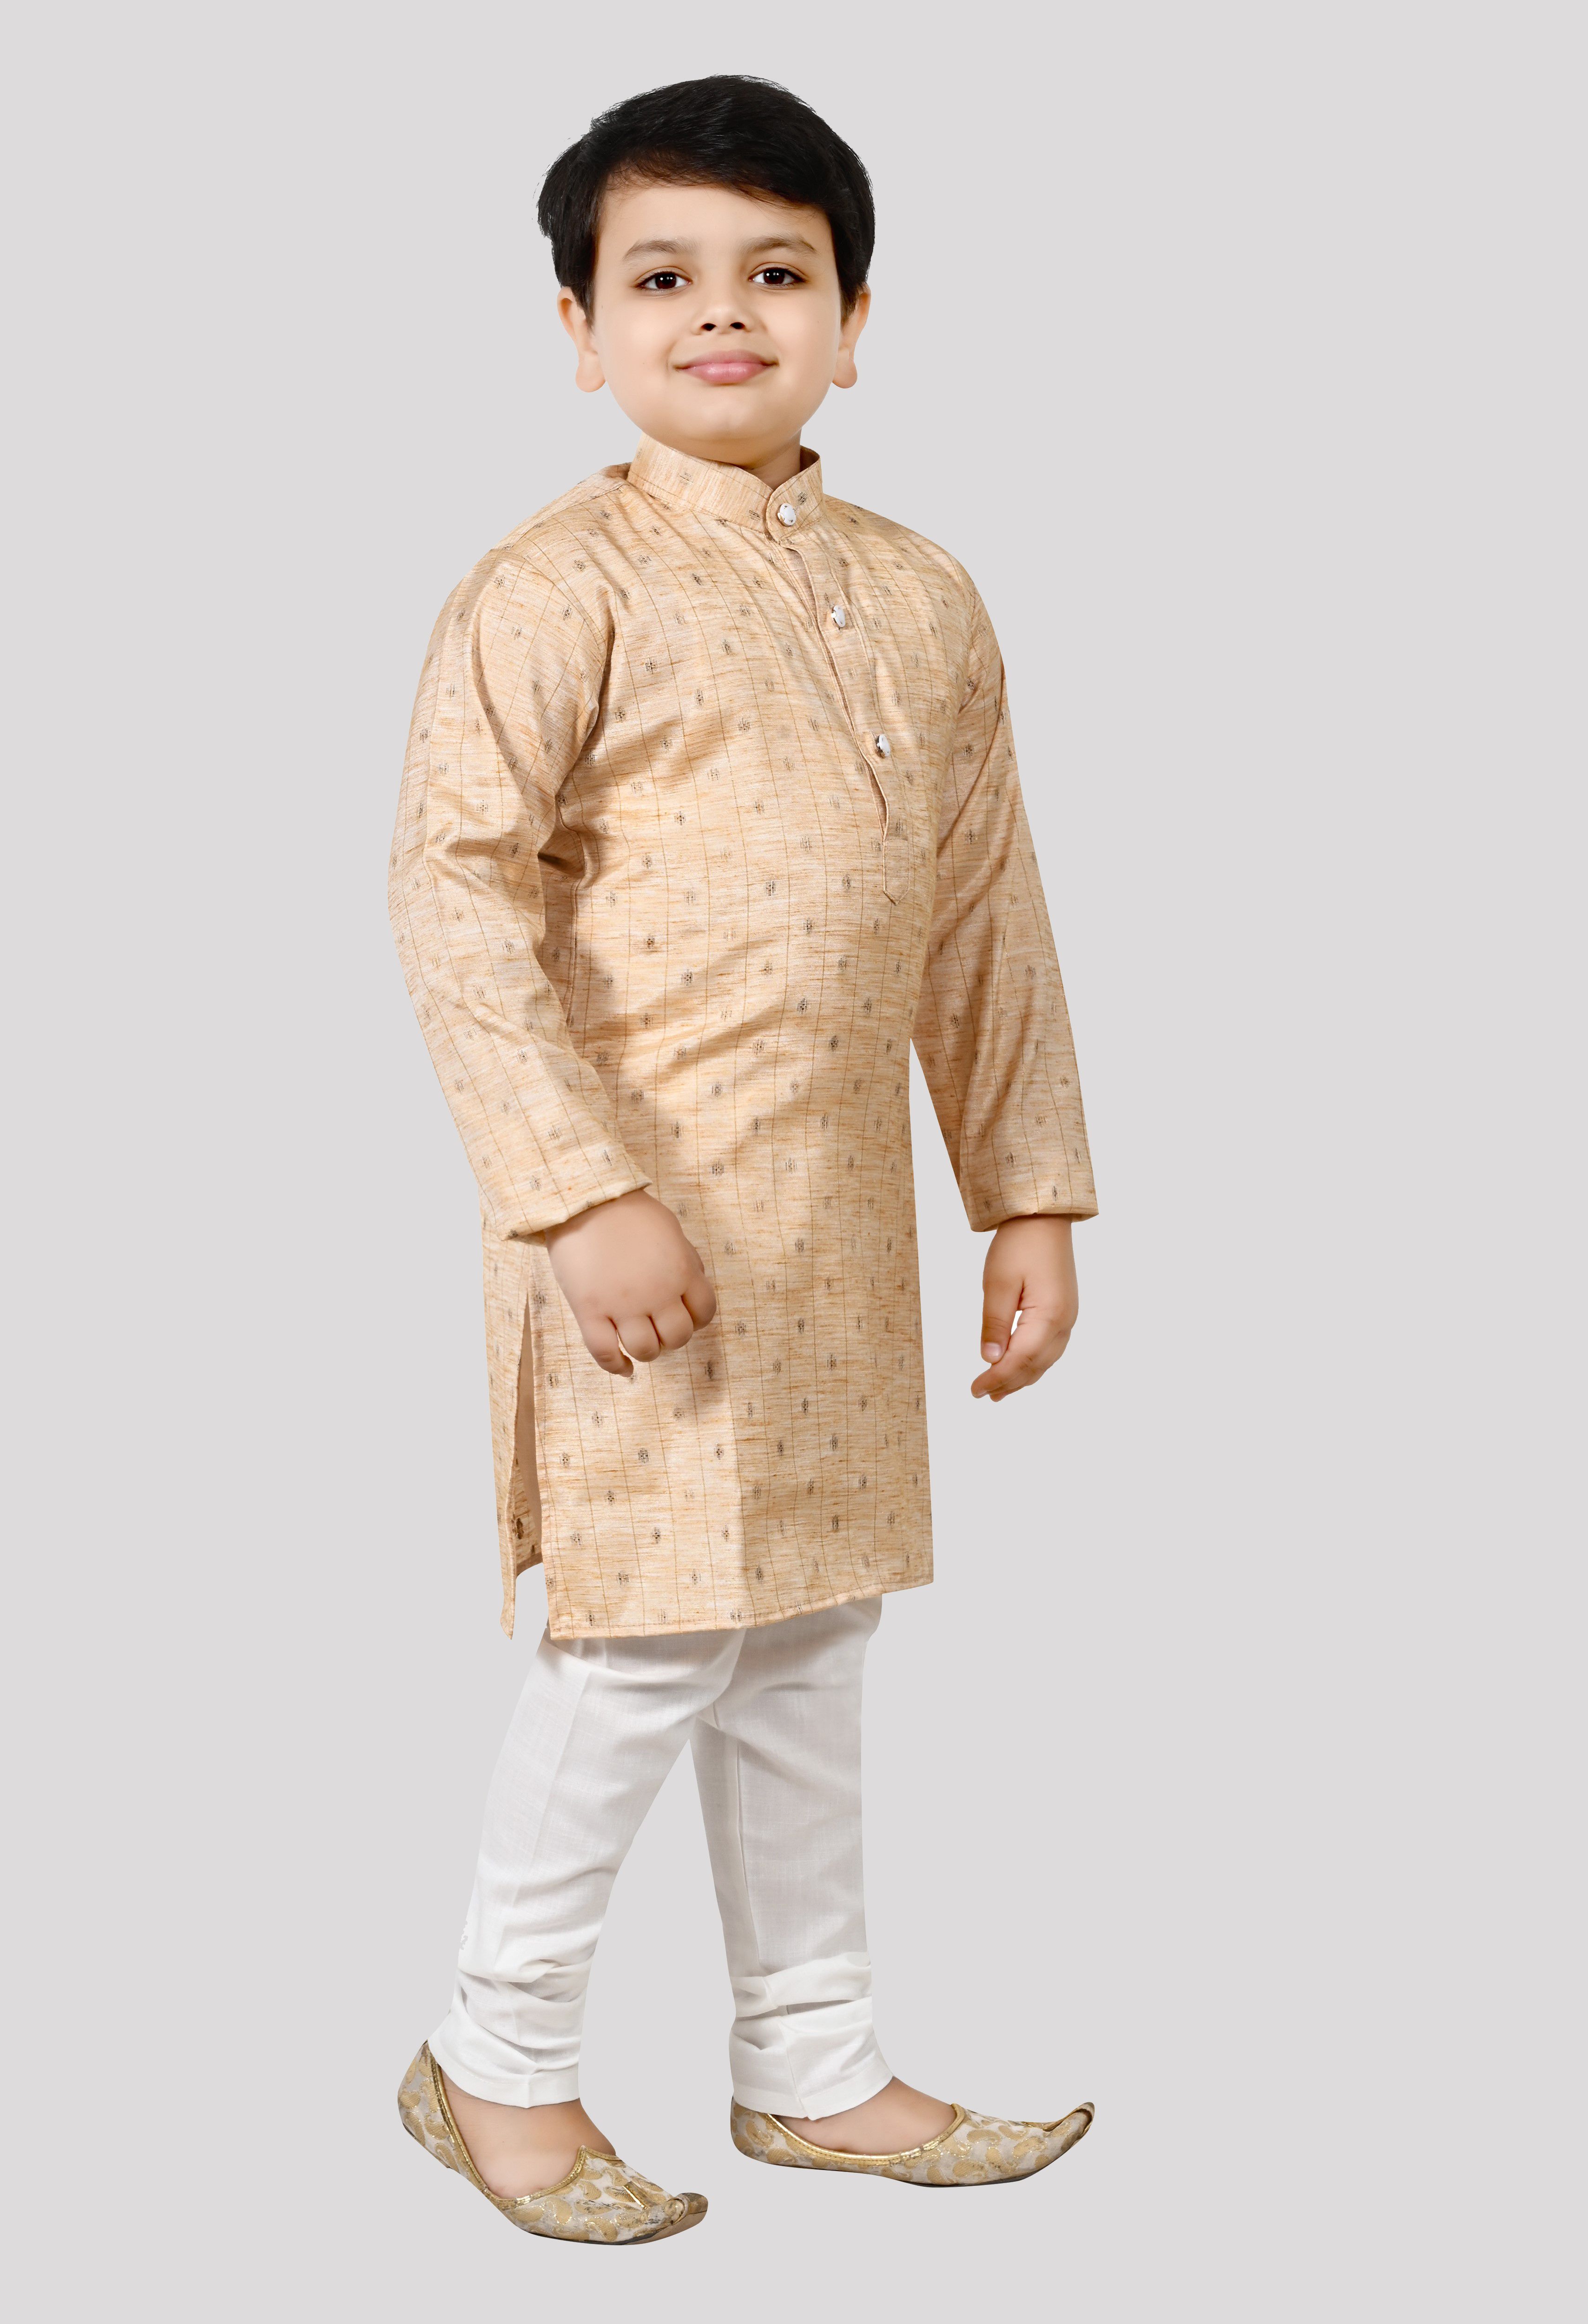     			Arshia Fashions - Gold Cotton Blend Boys Kurta Sets ( Pack of 1 )